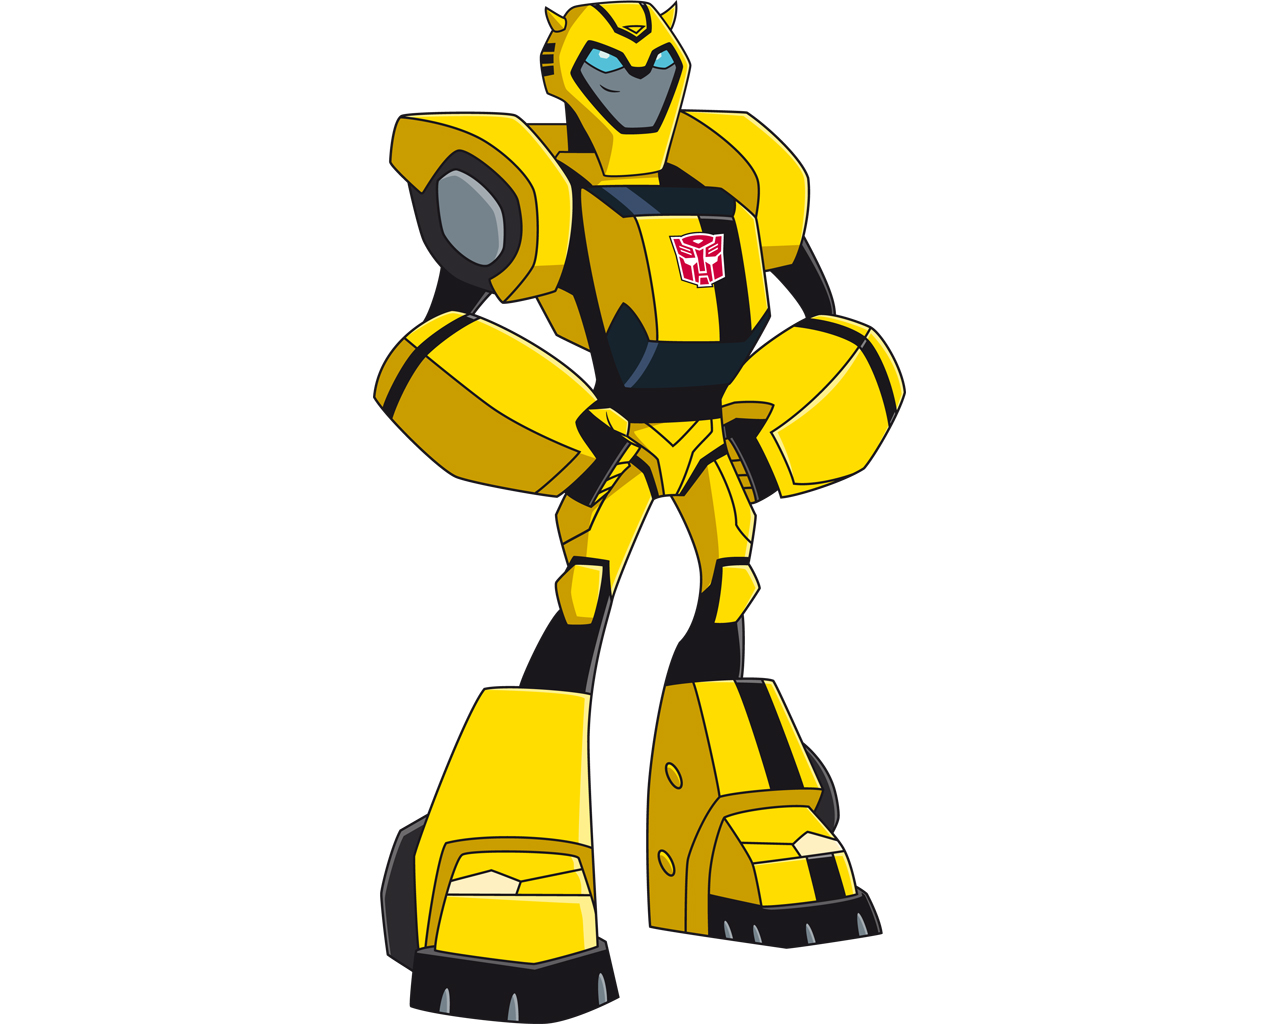 Transformers clipart bumblebee - ClipartFox